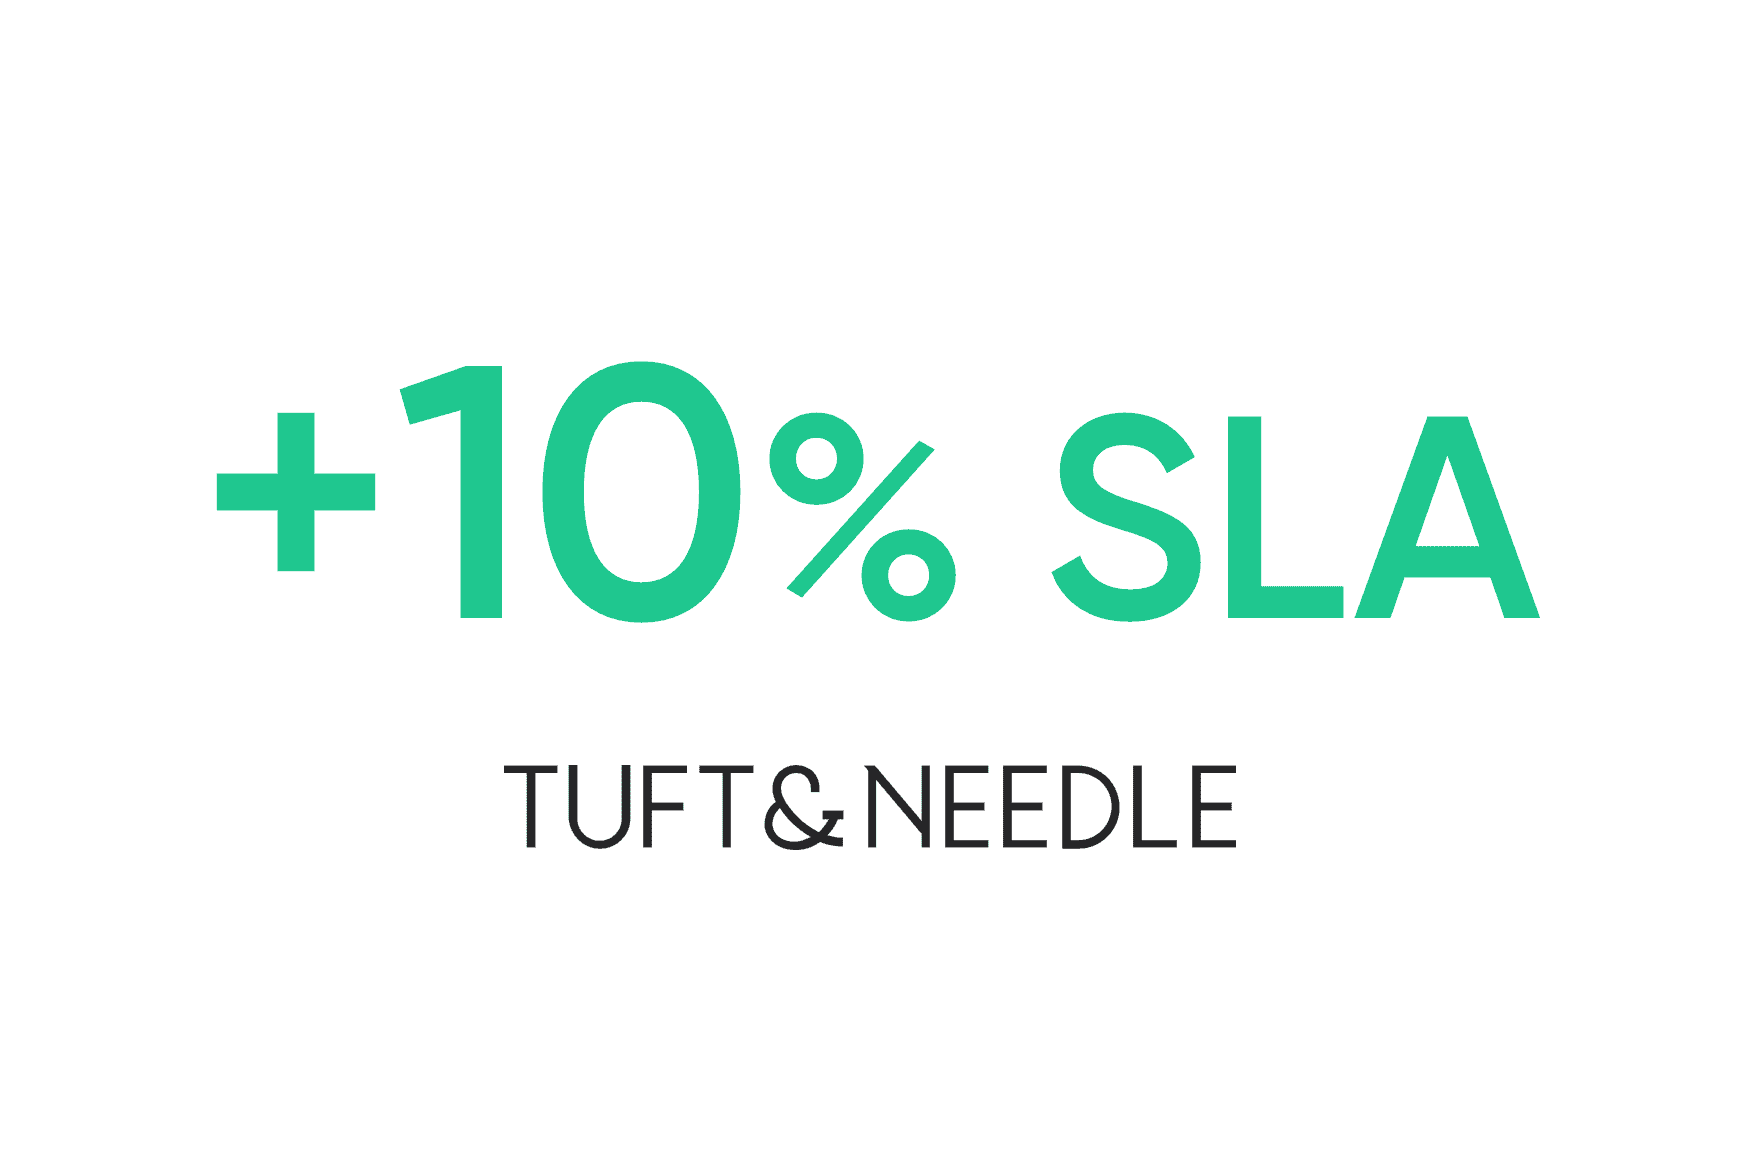 Tuft & Needle : augmentation de 10 % des SLA